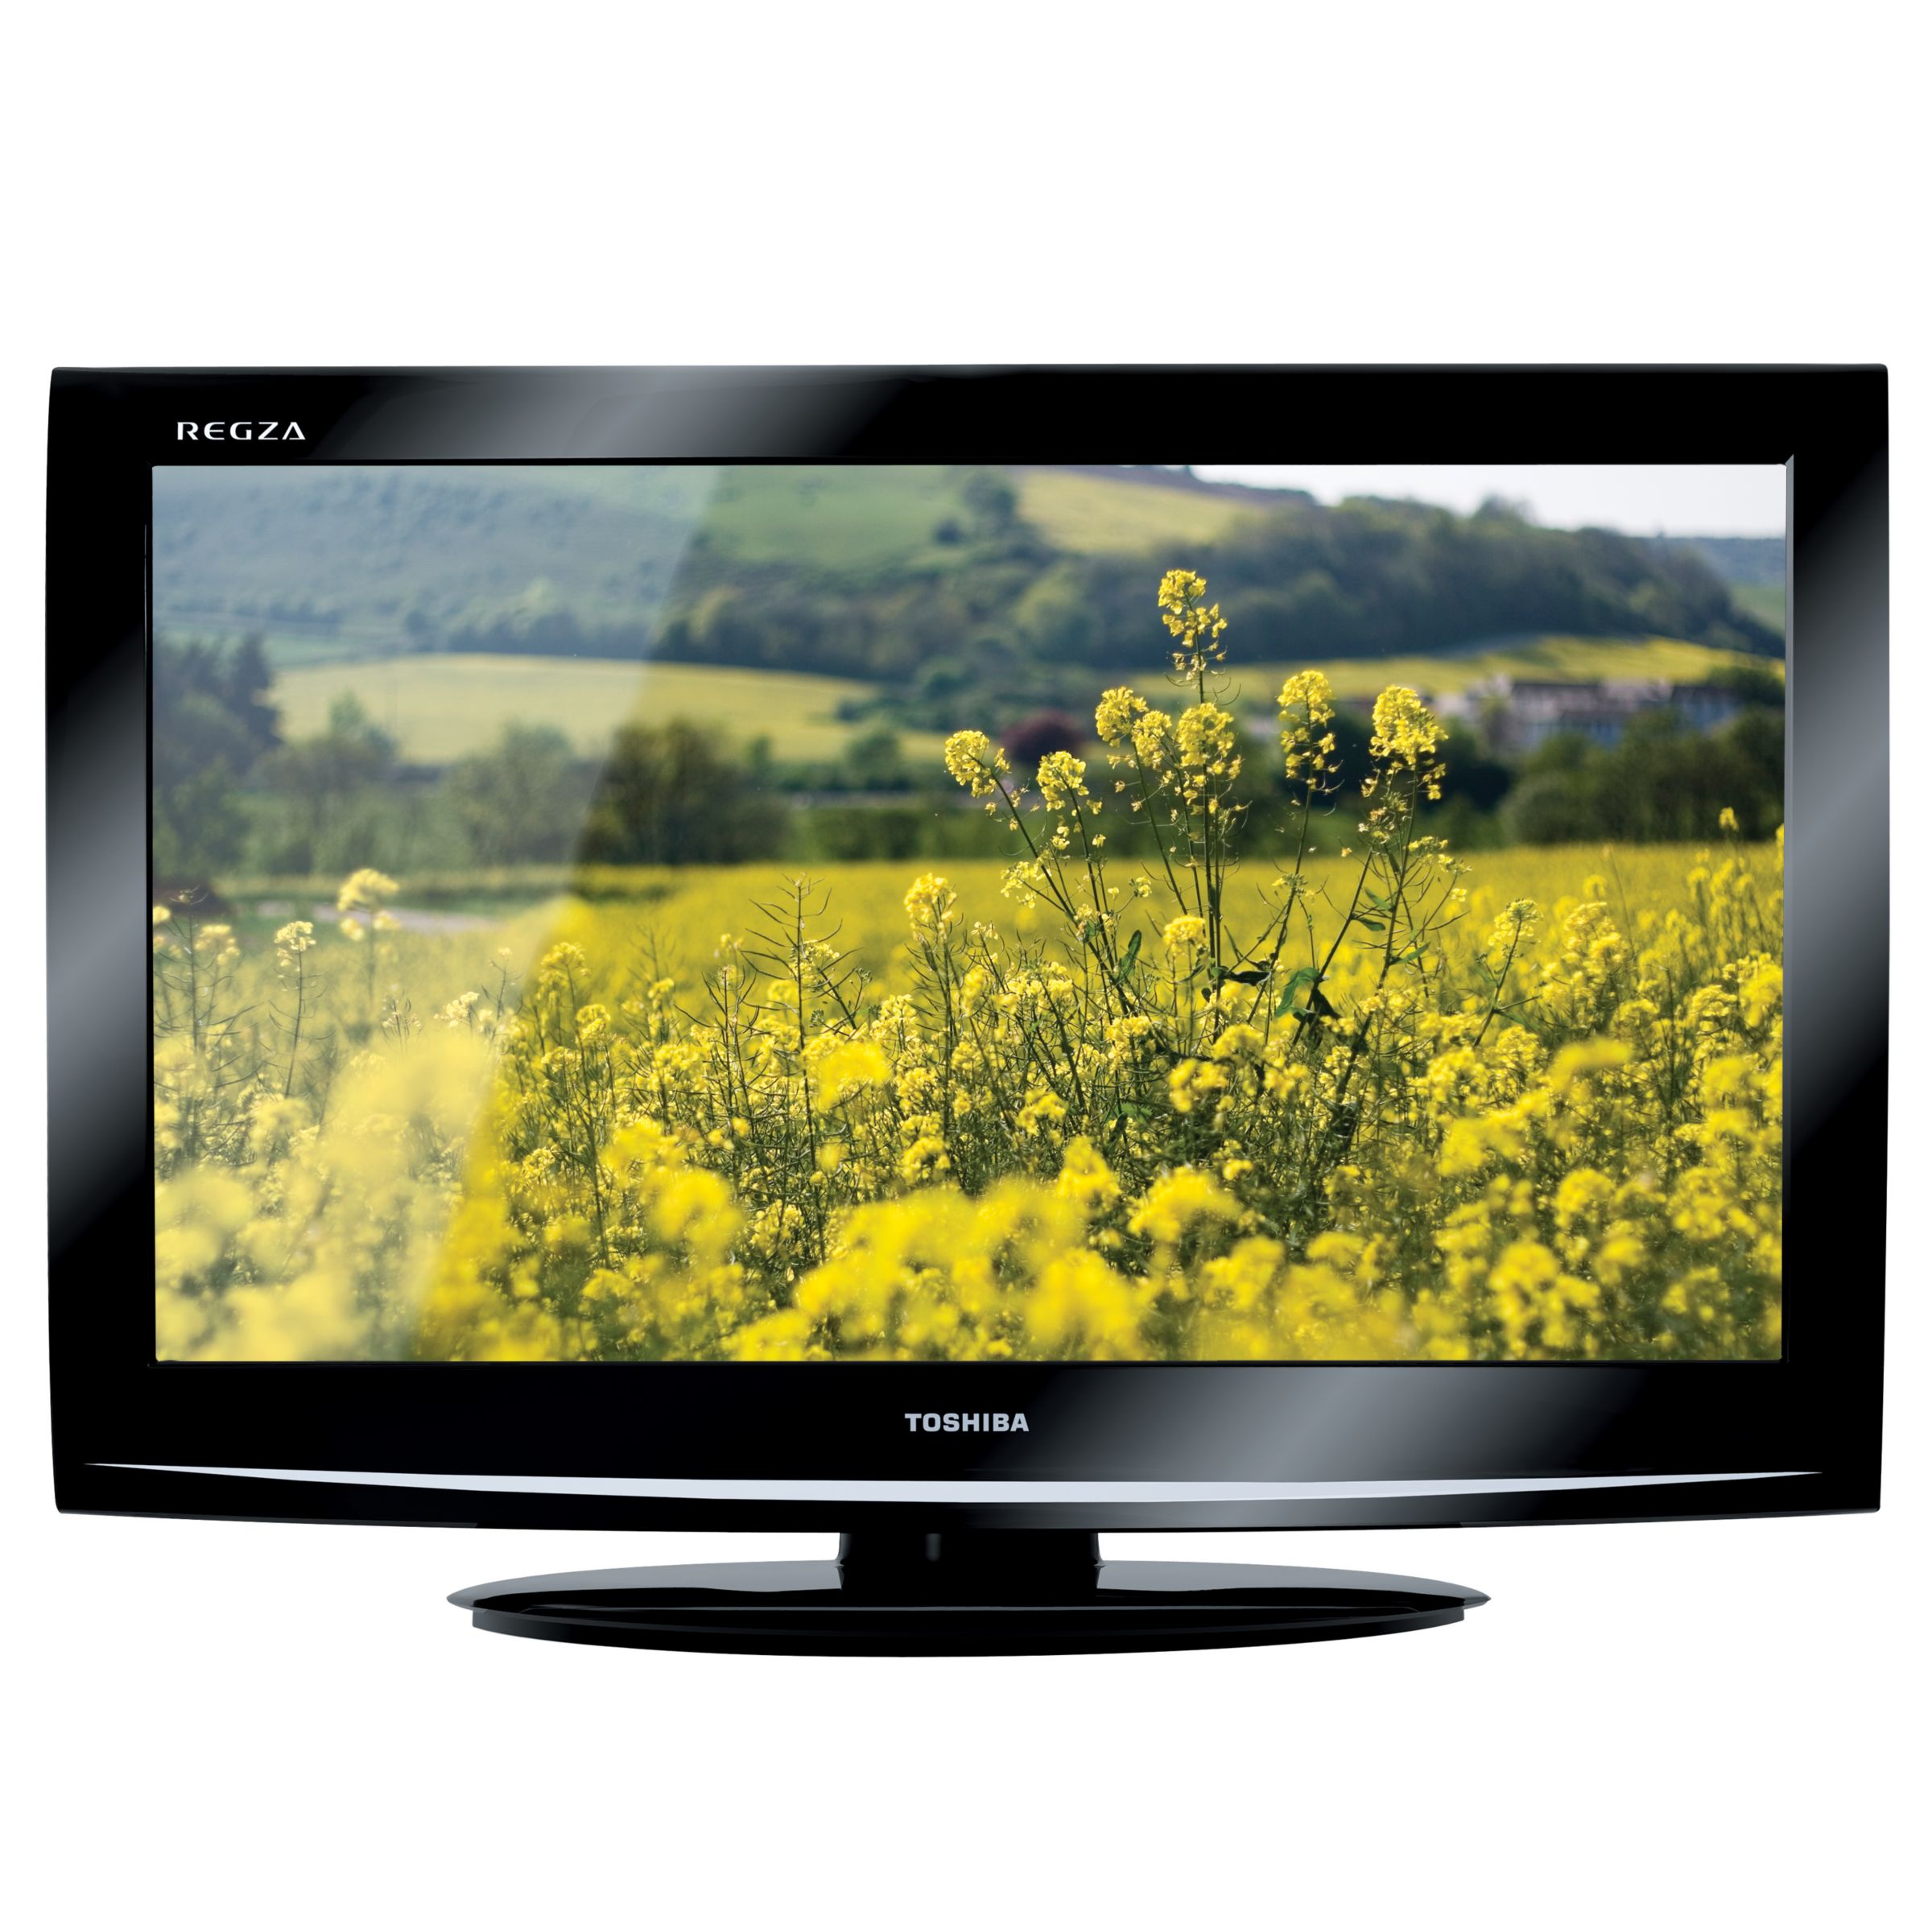 Toshiba Regza 32AV713B LCD HD Ready Digital Television, 32 Inch at John Lewis